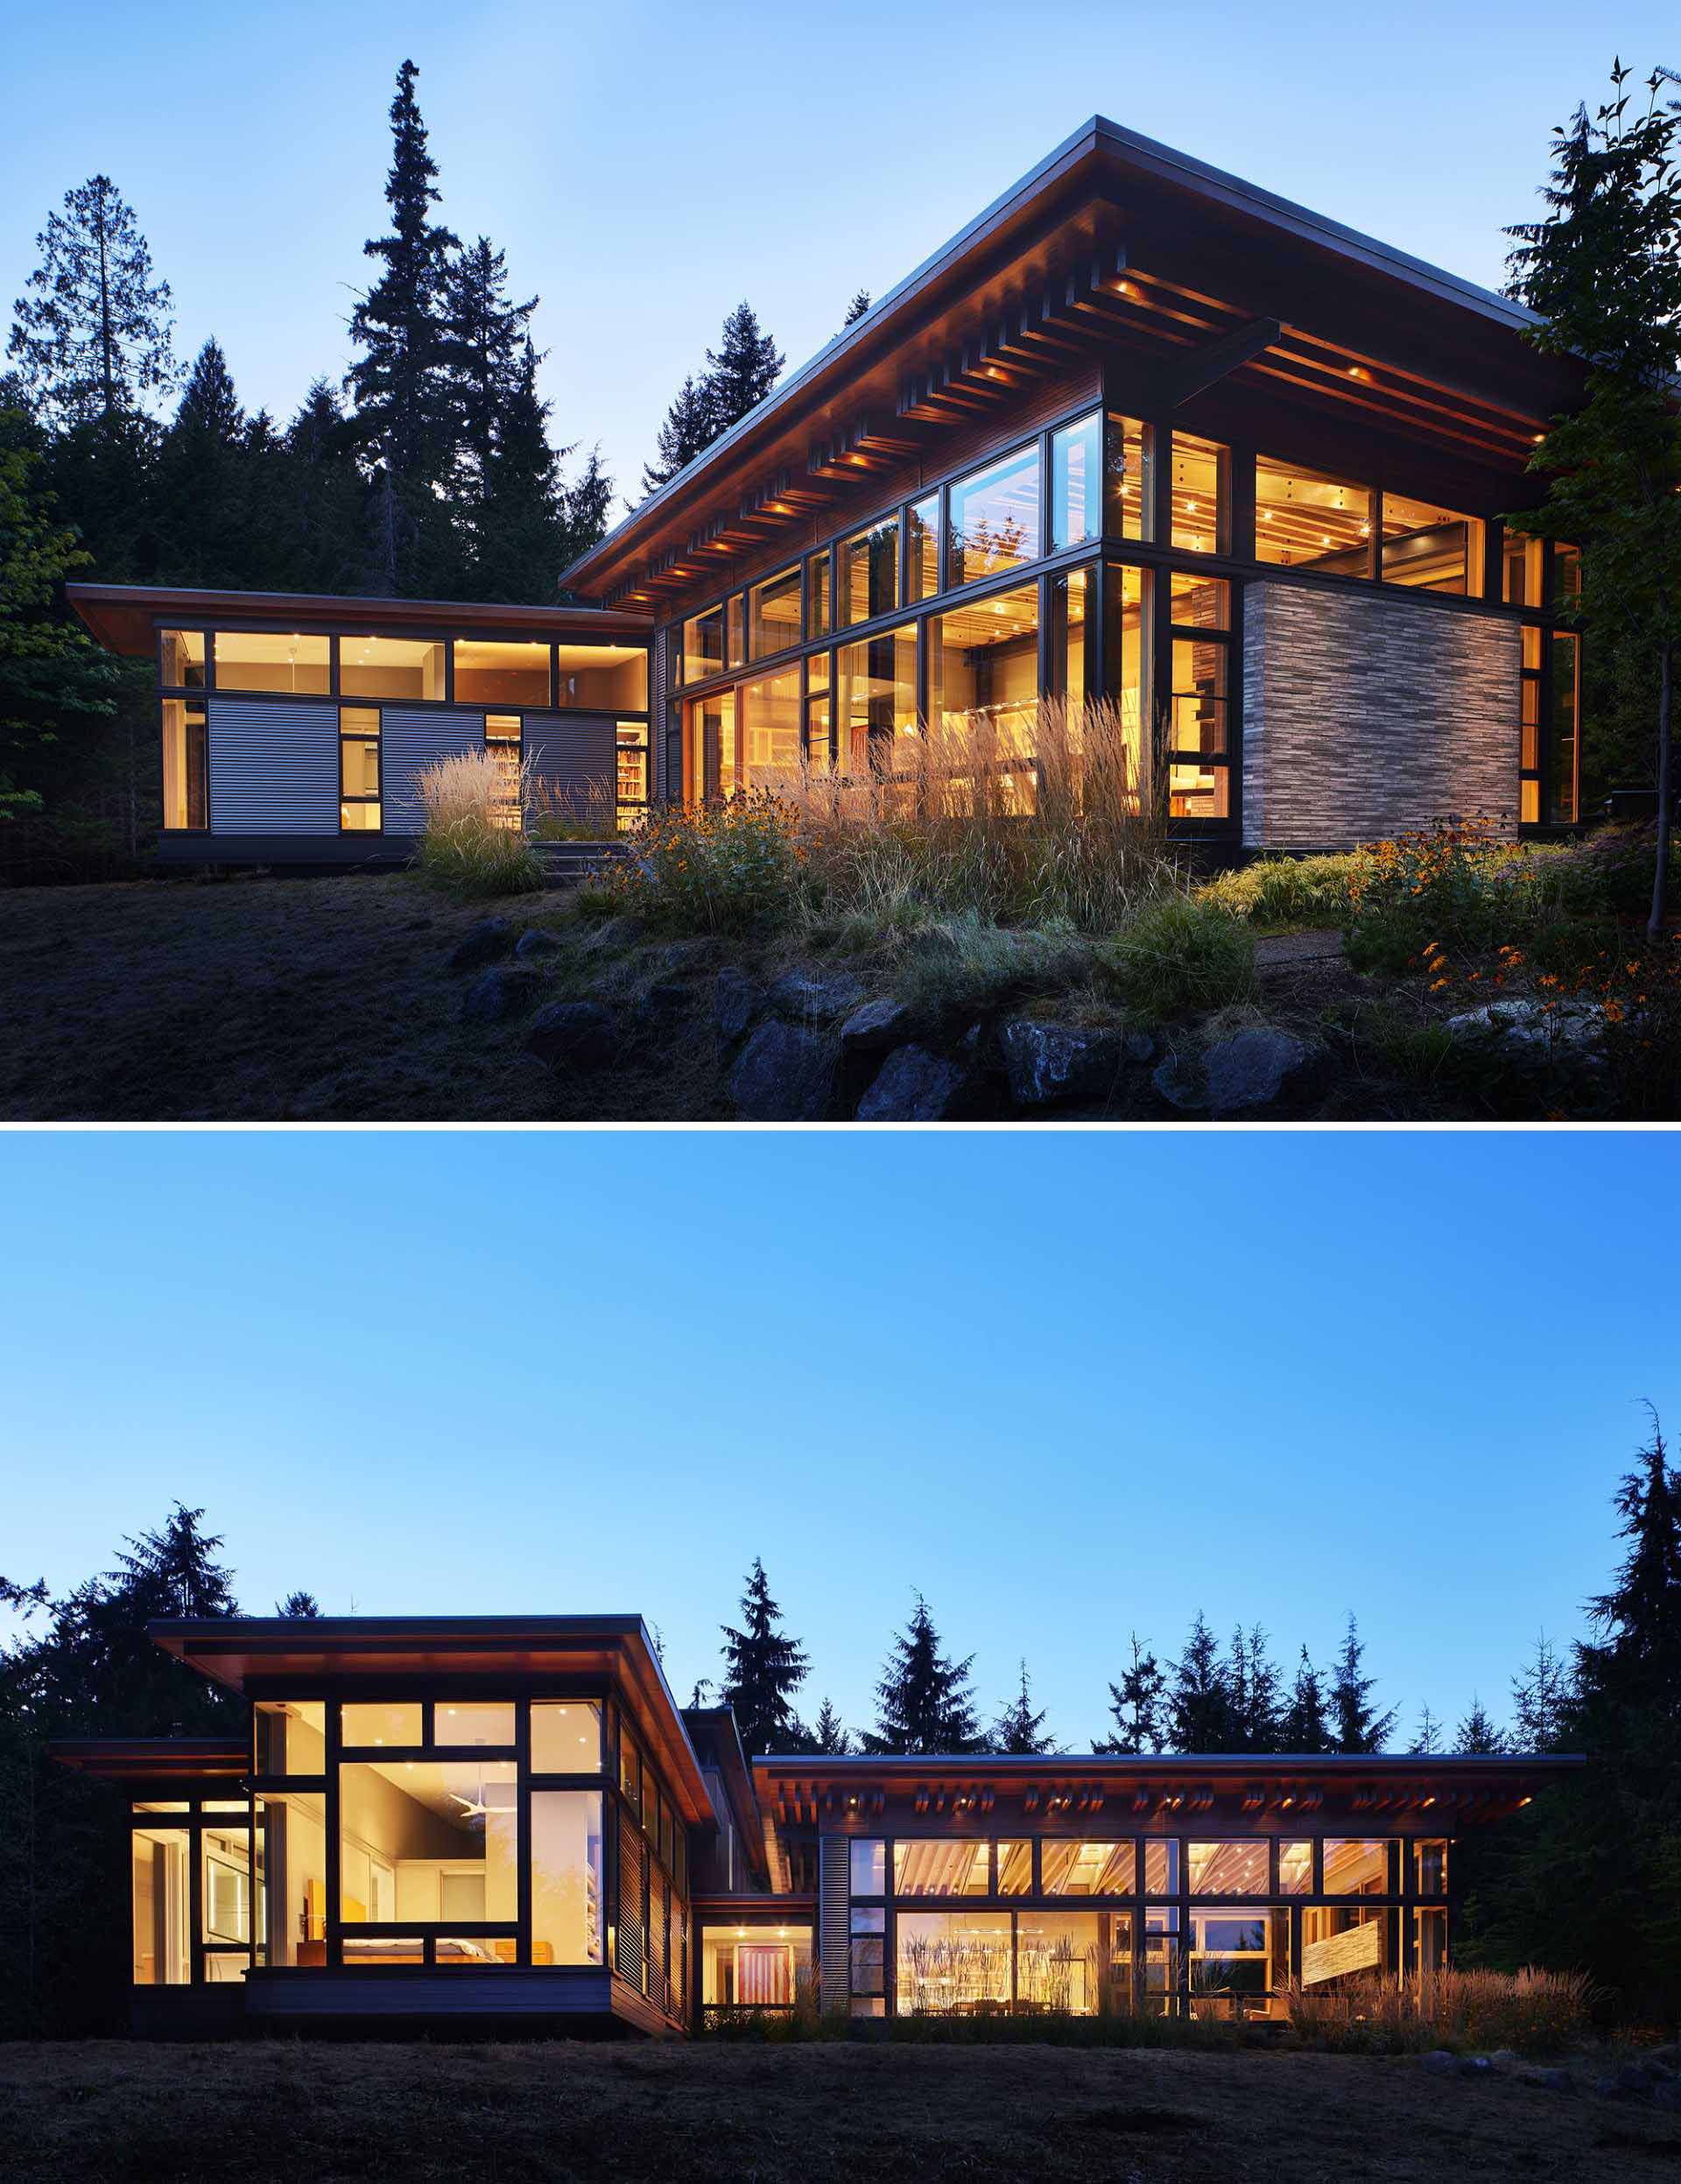 FINNE Architects has shared photos of a Pacific Northwest house they designed on Bainbridge Island, Washington.